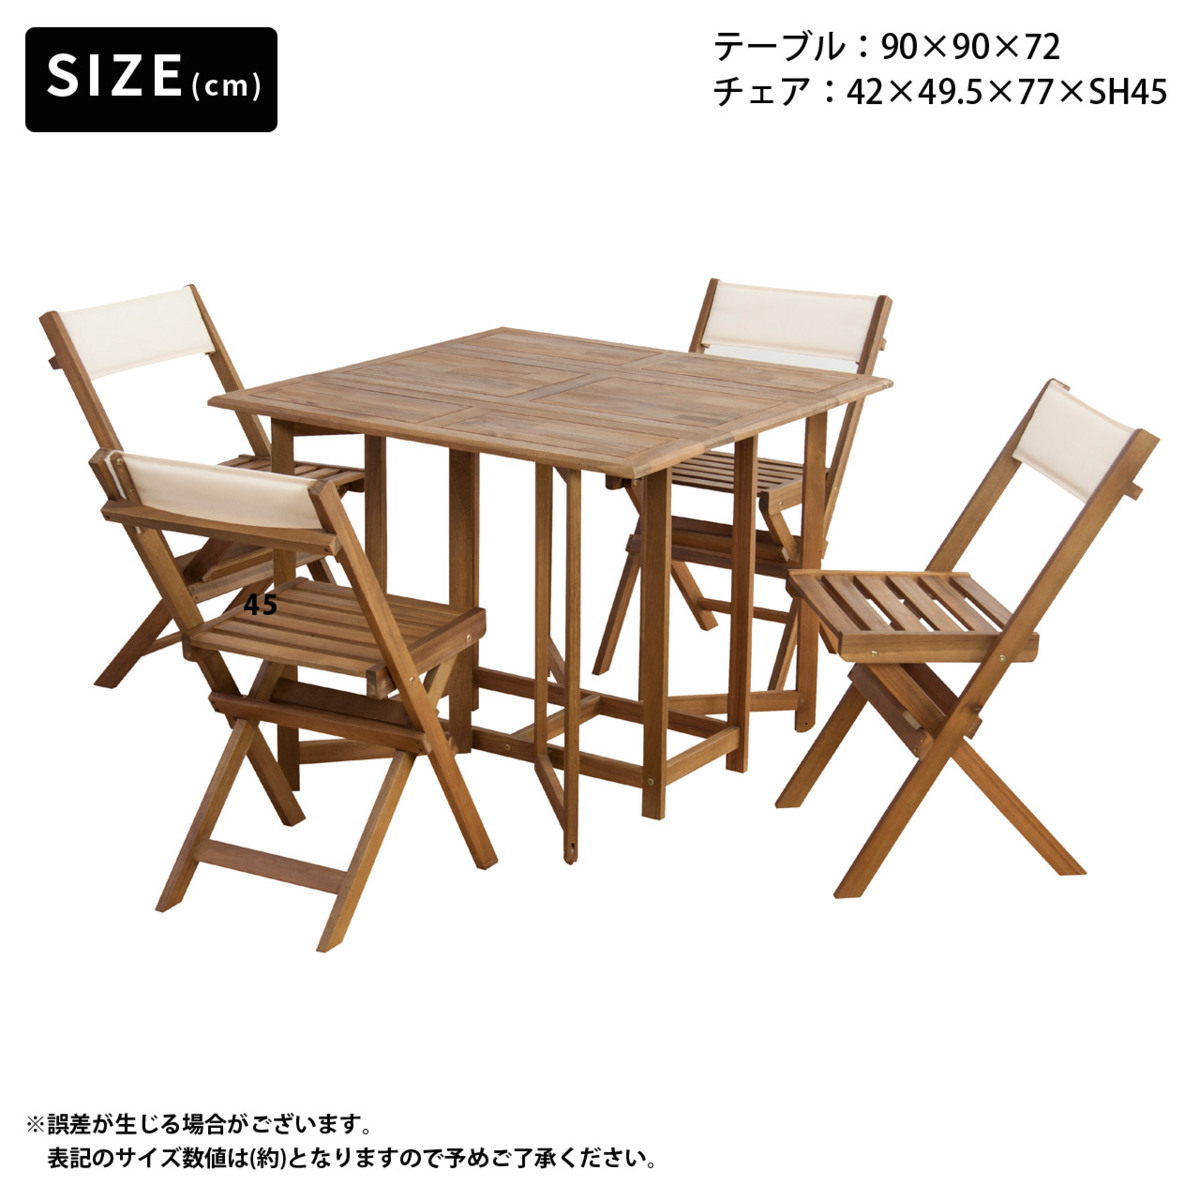  натуральное дерево складной стол 5 позиций комплект обеденный комплект обеденный 5 позиций комплект сад комплект барбекю стол стул стул 